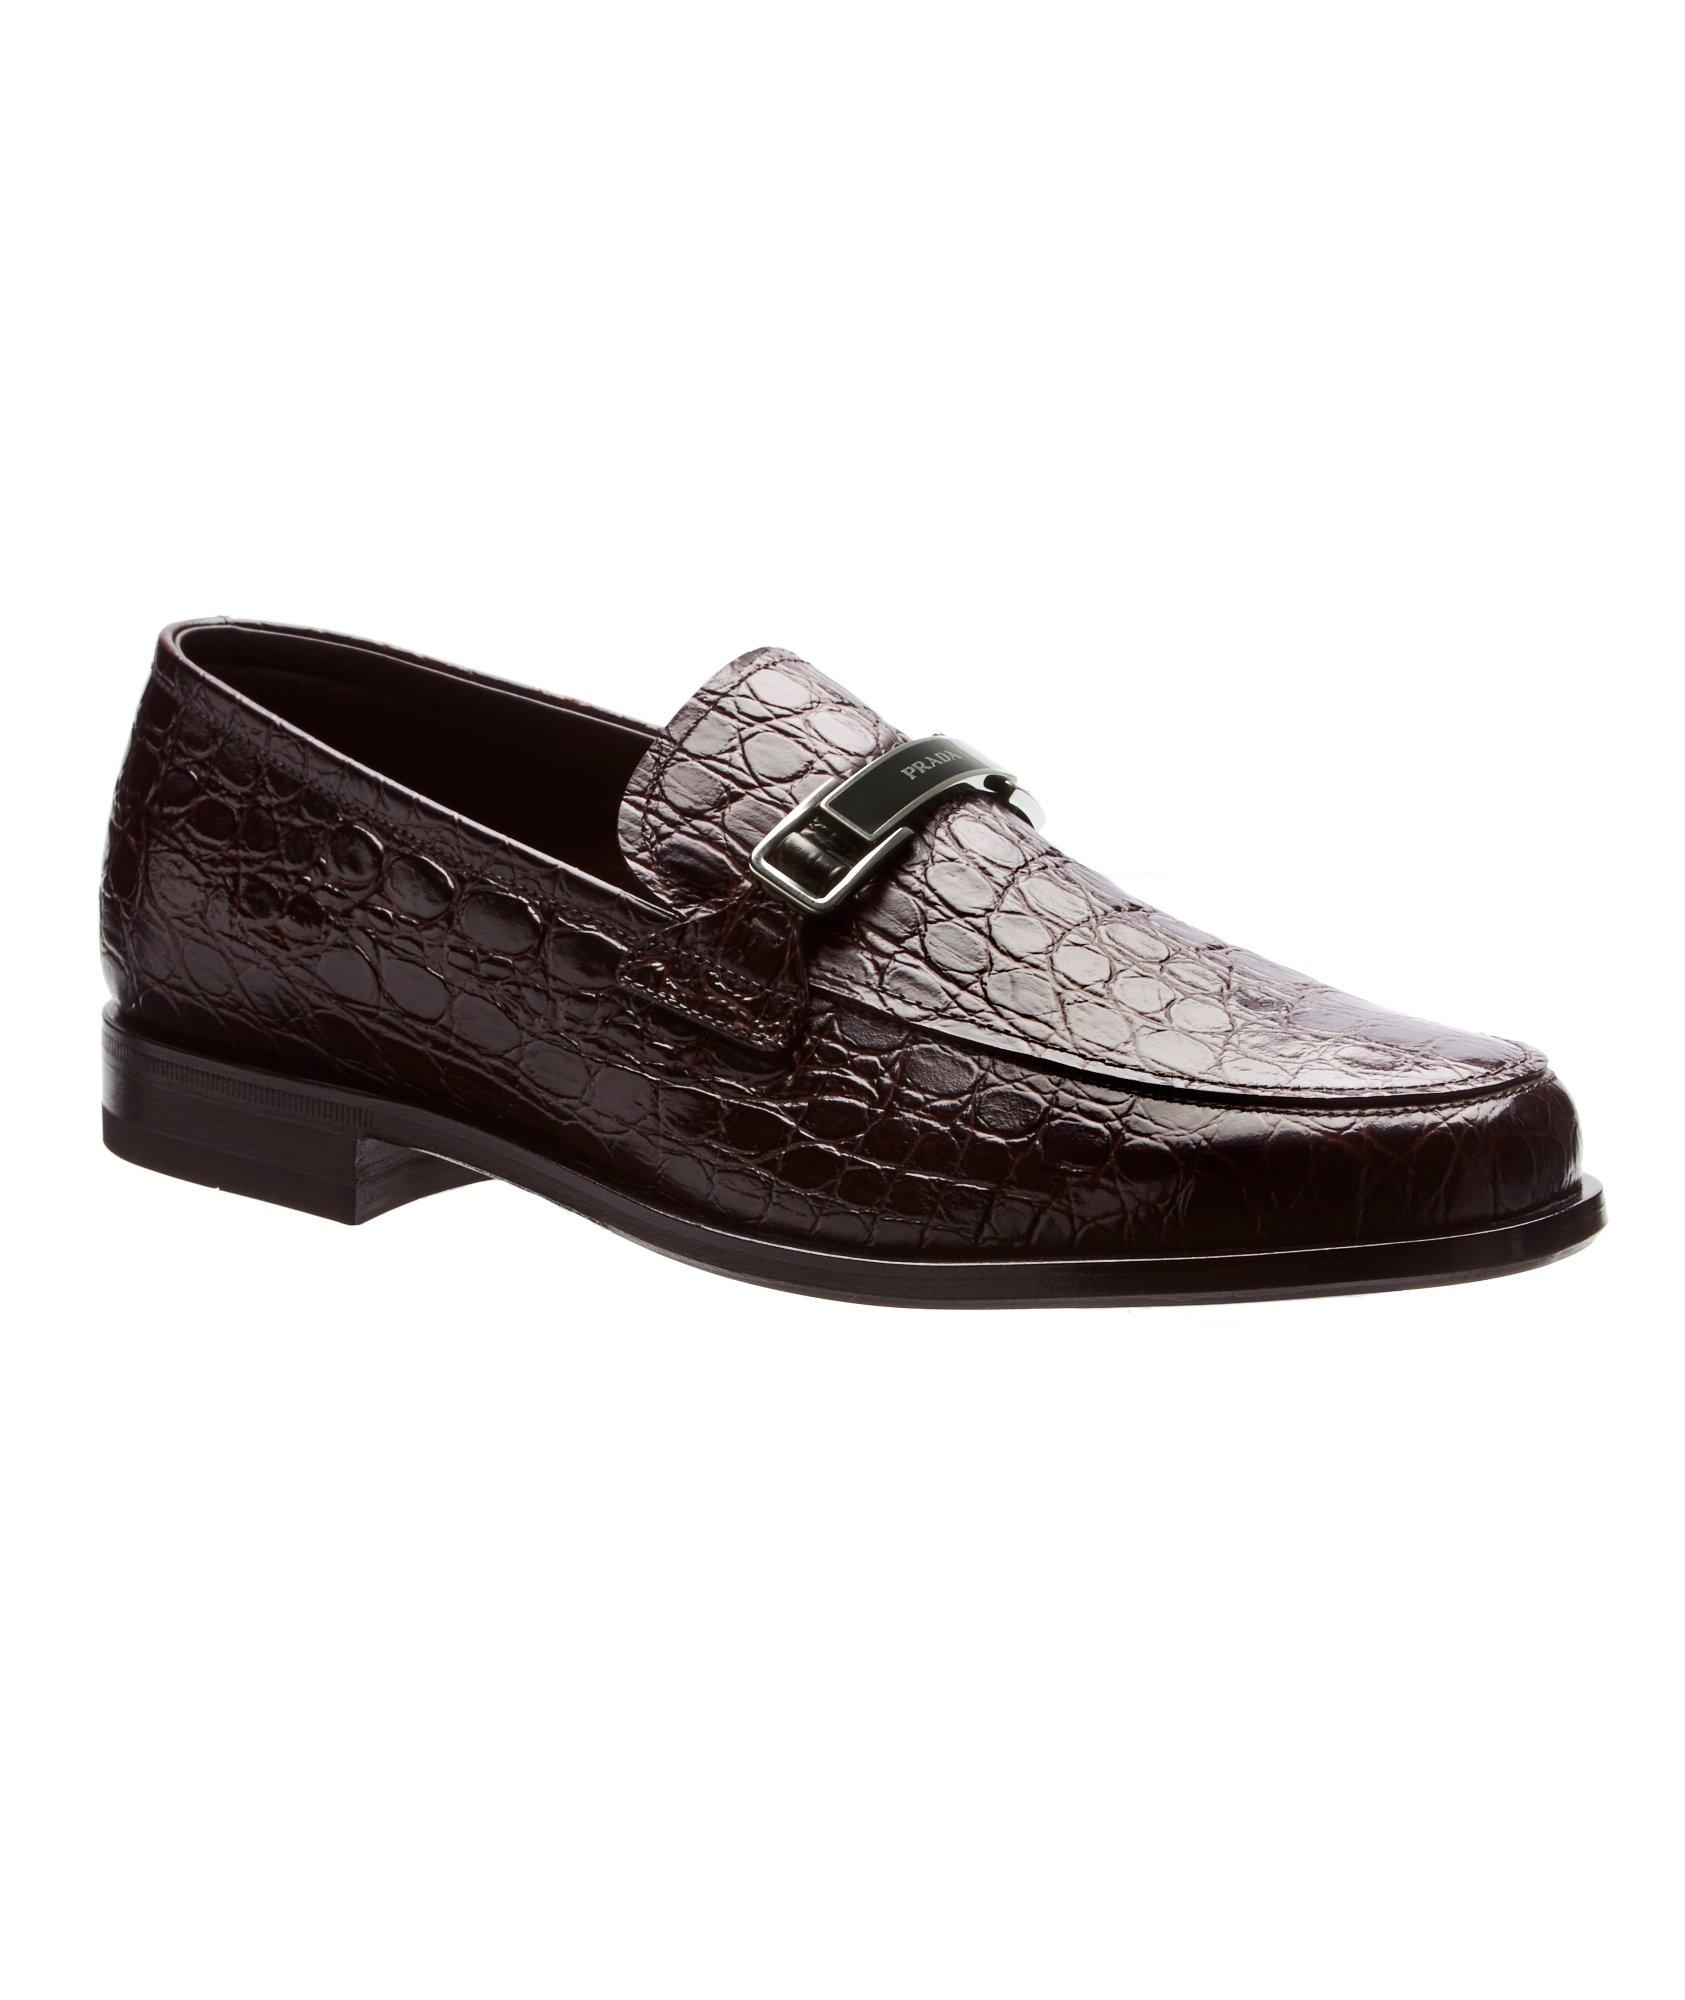 Crocodile-Embossed Leather Loafers image 0